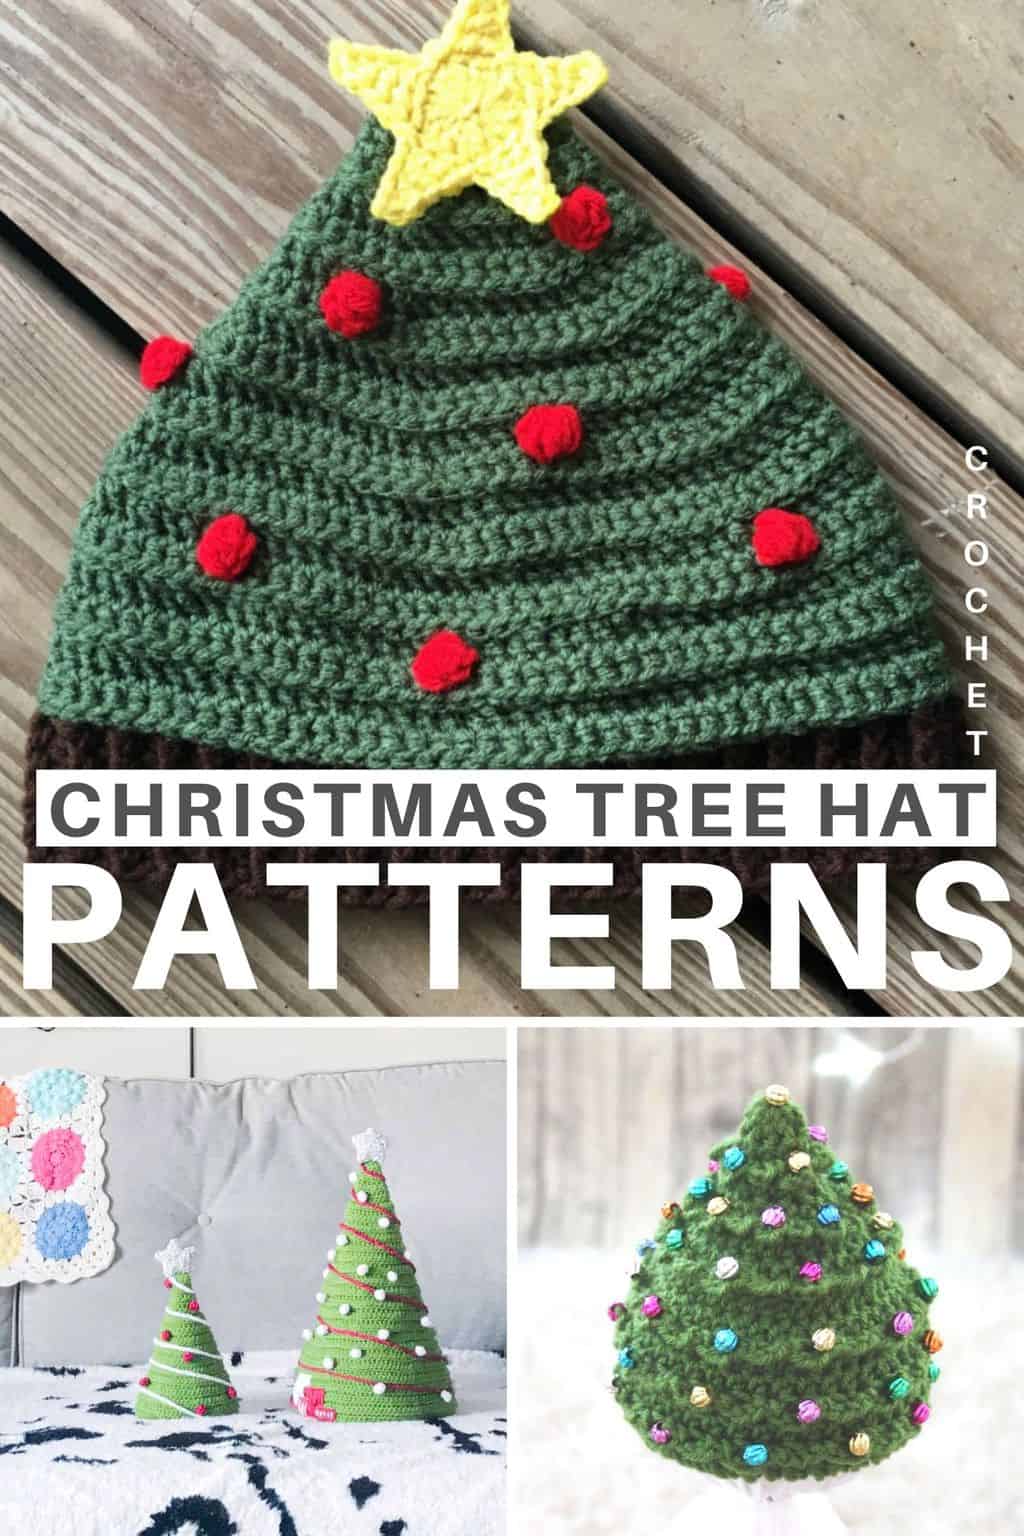 Christmas Tree Hat Crochet Patterns - Easy Crochet Patterns